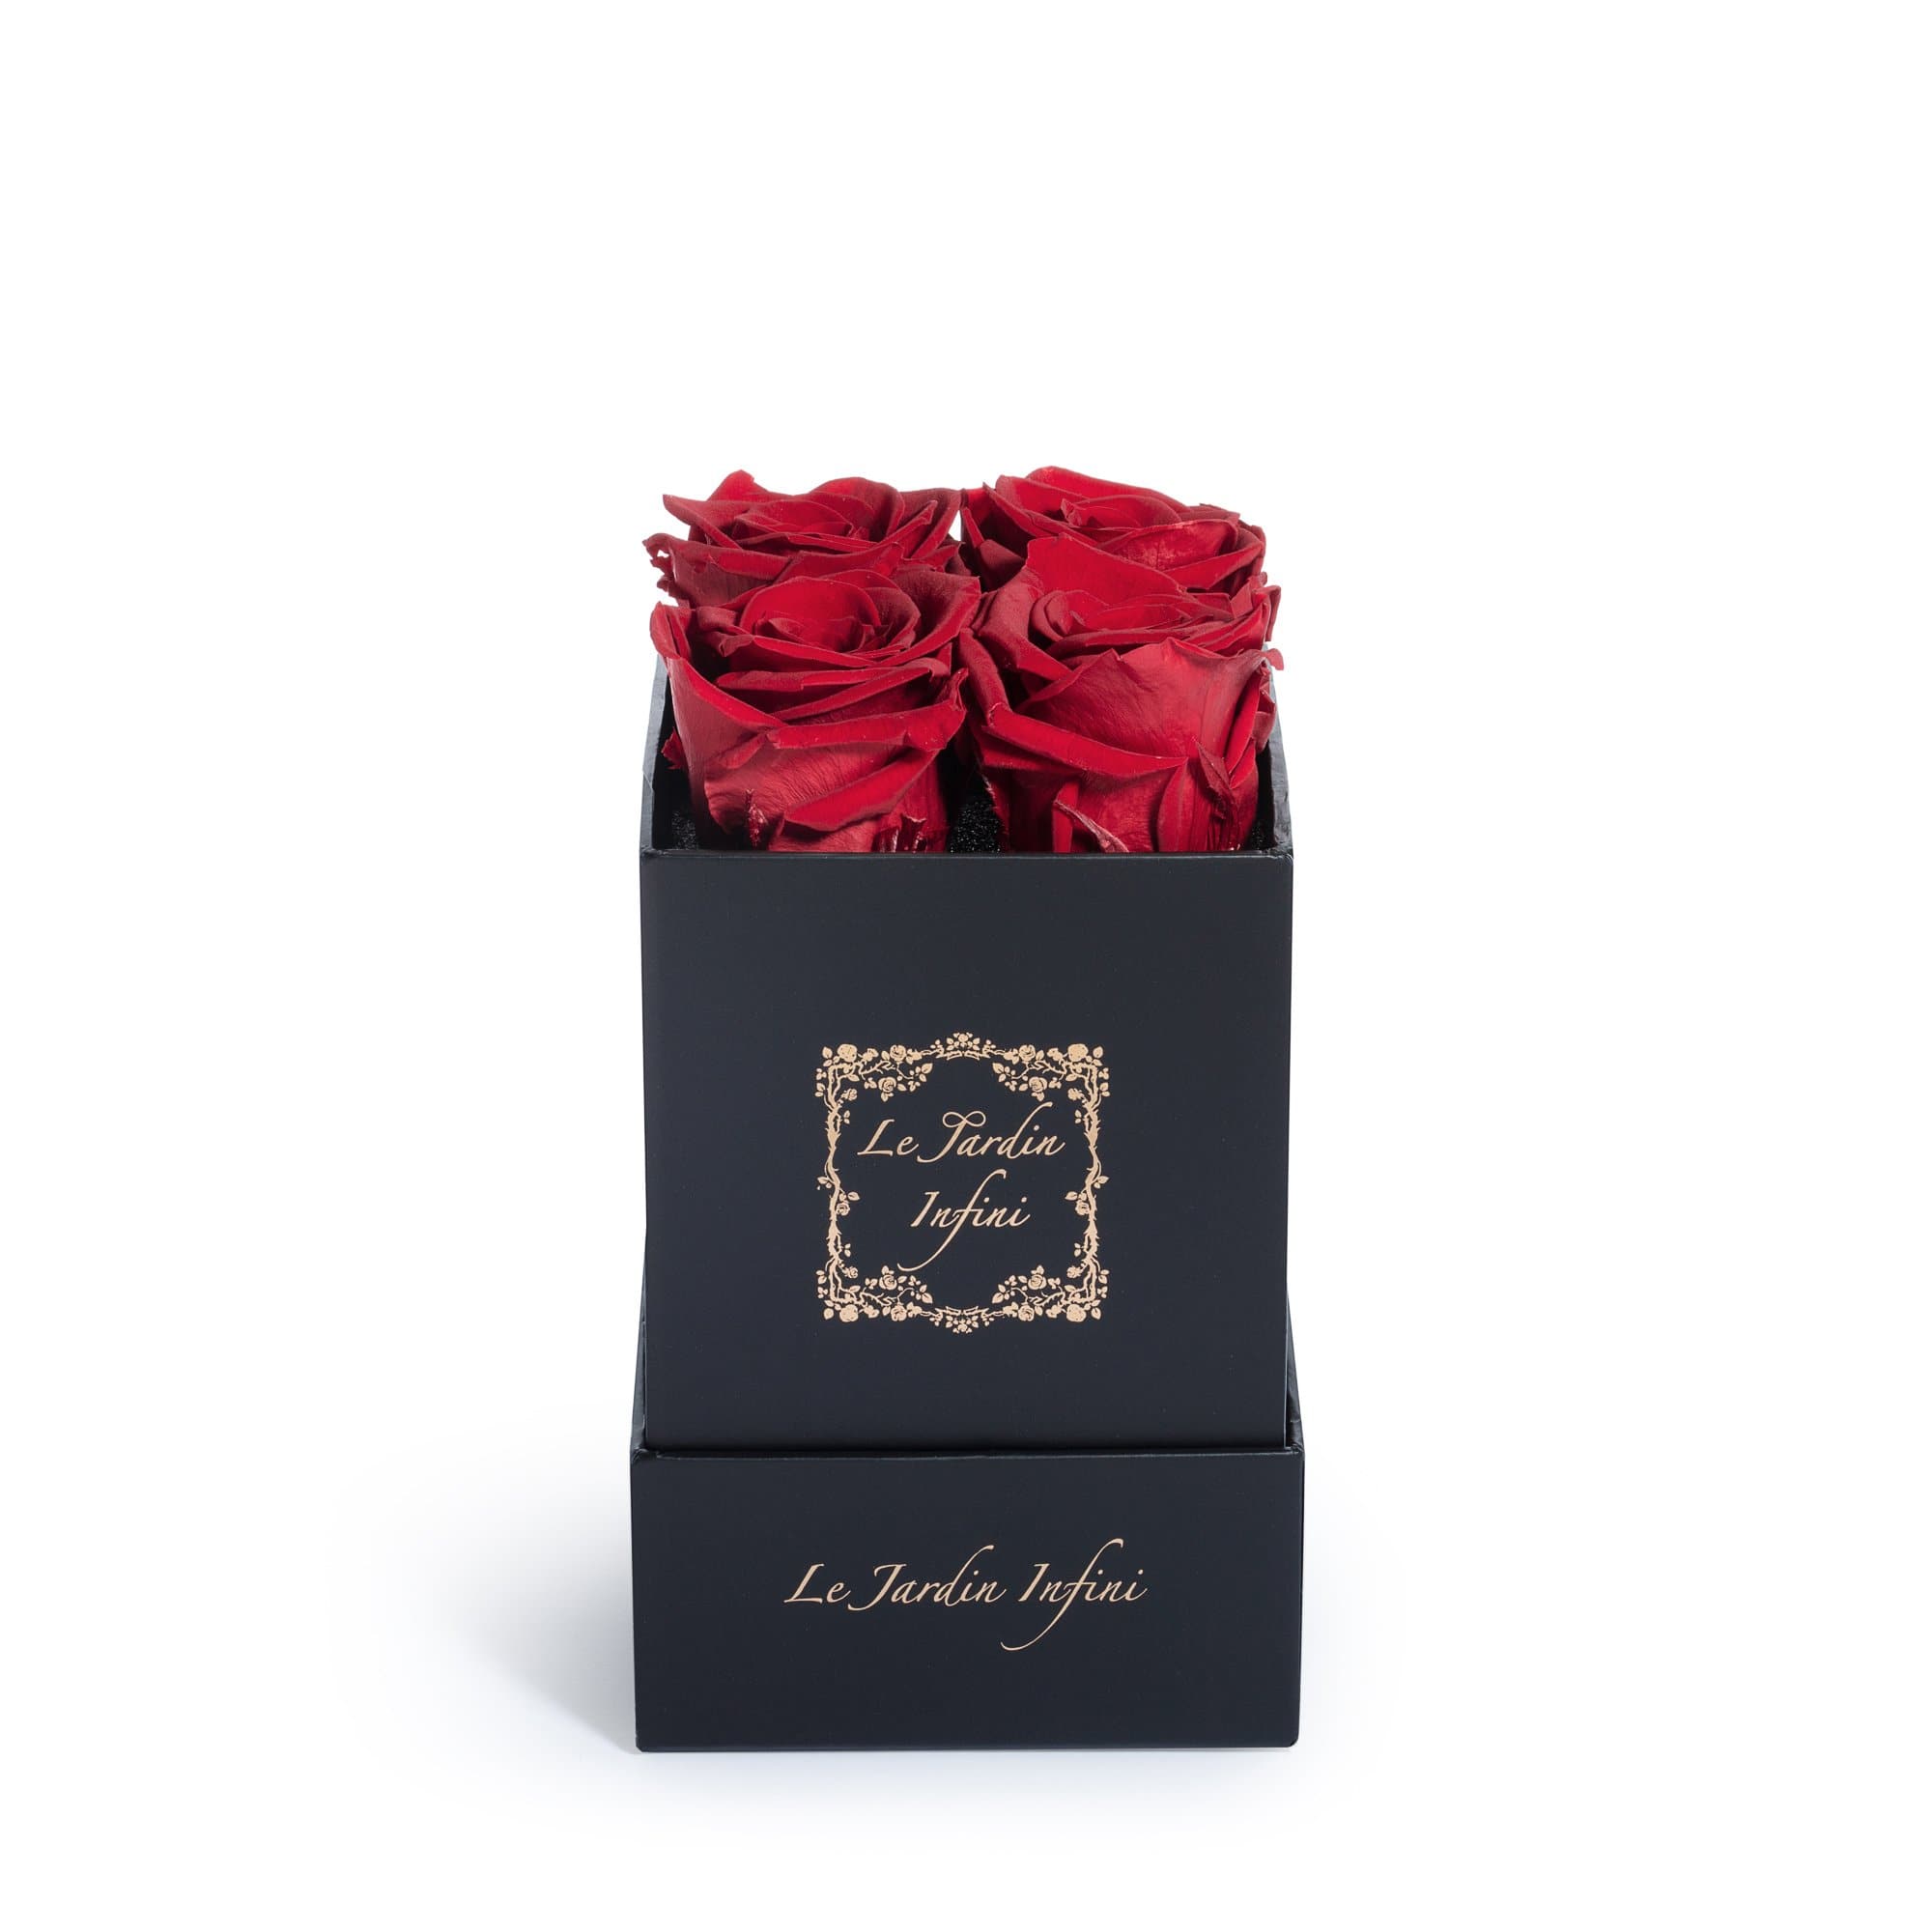 Burgundy Preserved Roses - Small Square Black Box - Le Jardin Infini Roses in a Box